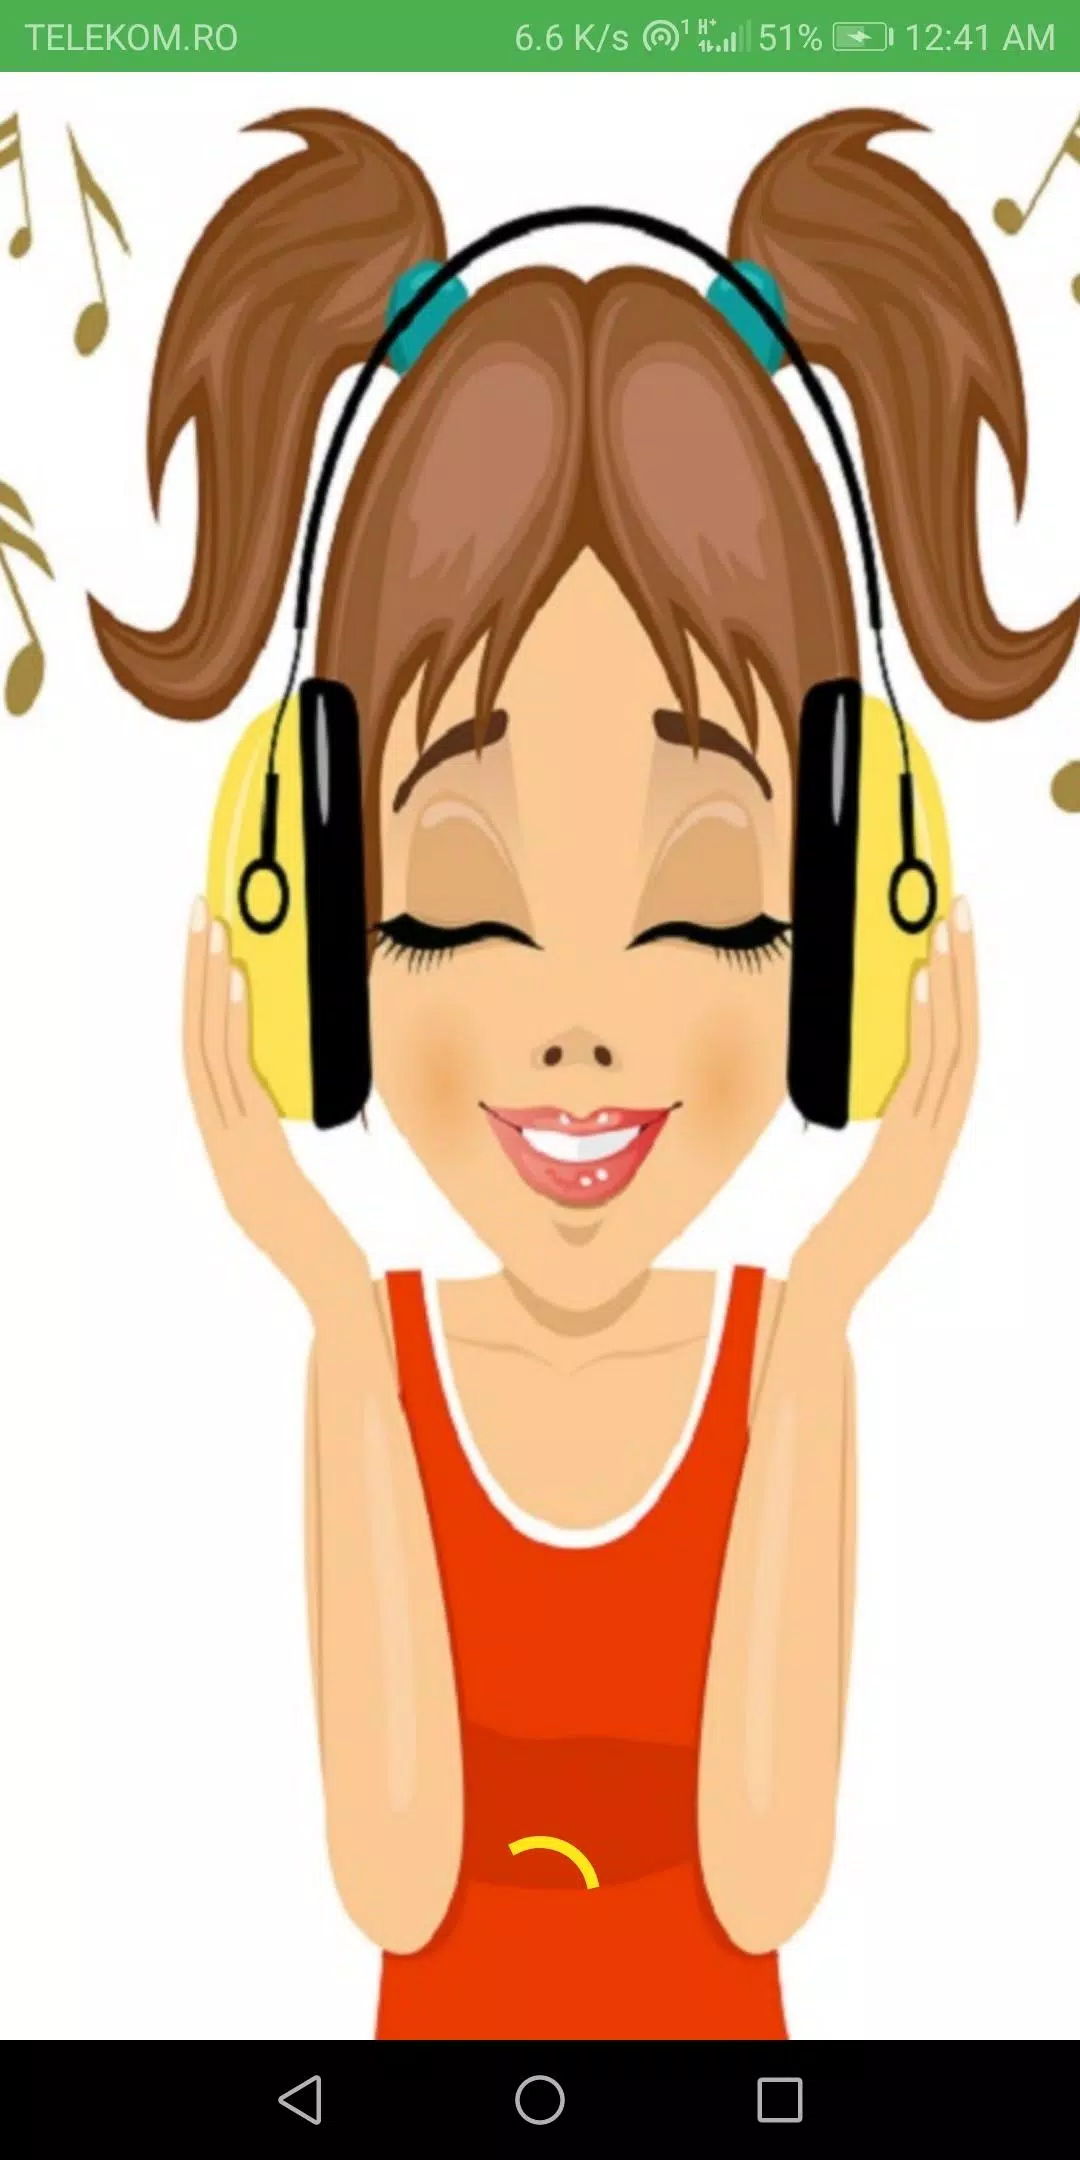 Fm Muzica Populara Etno - Ascultă Radio Live for Android - APK Download